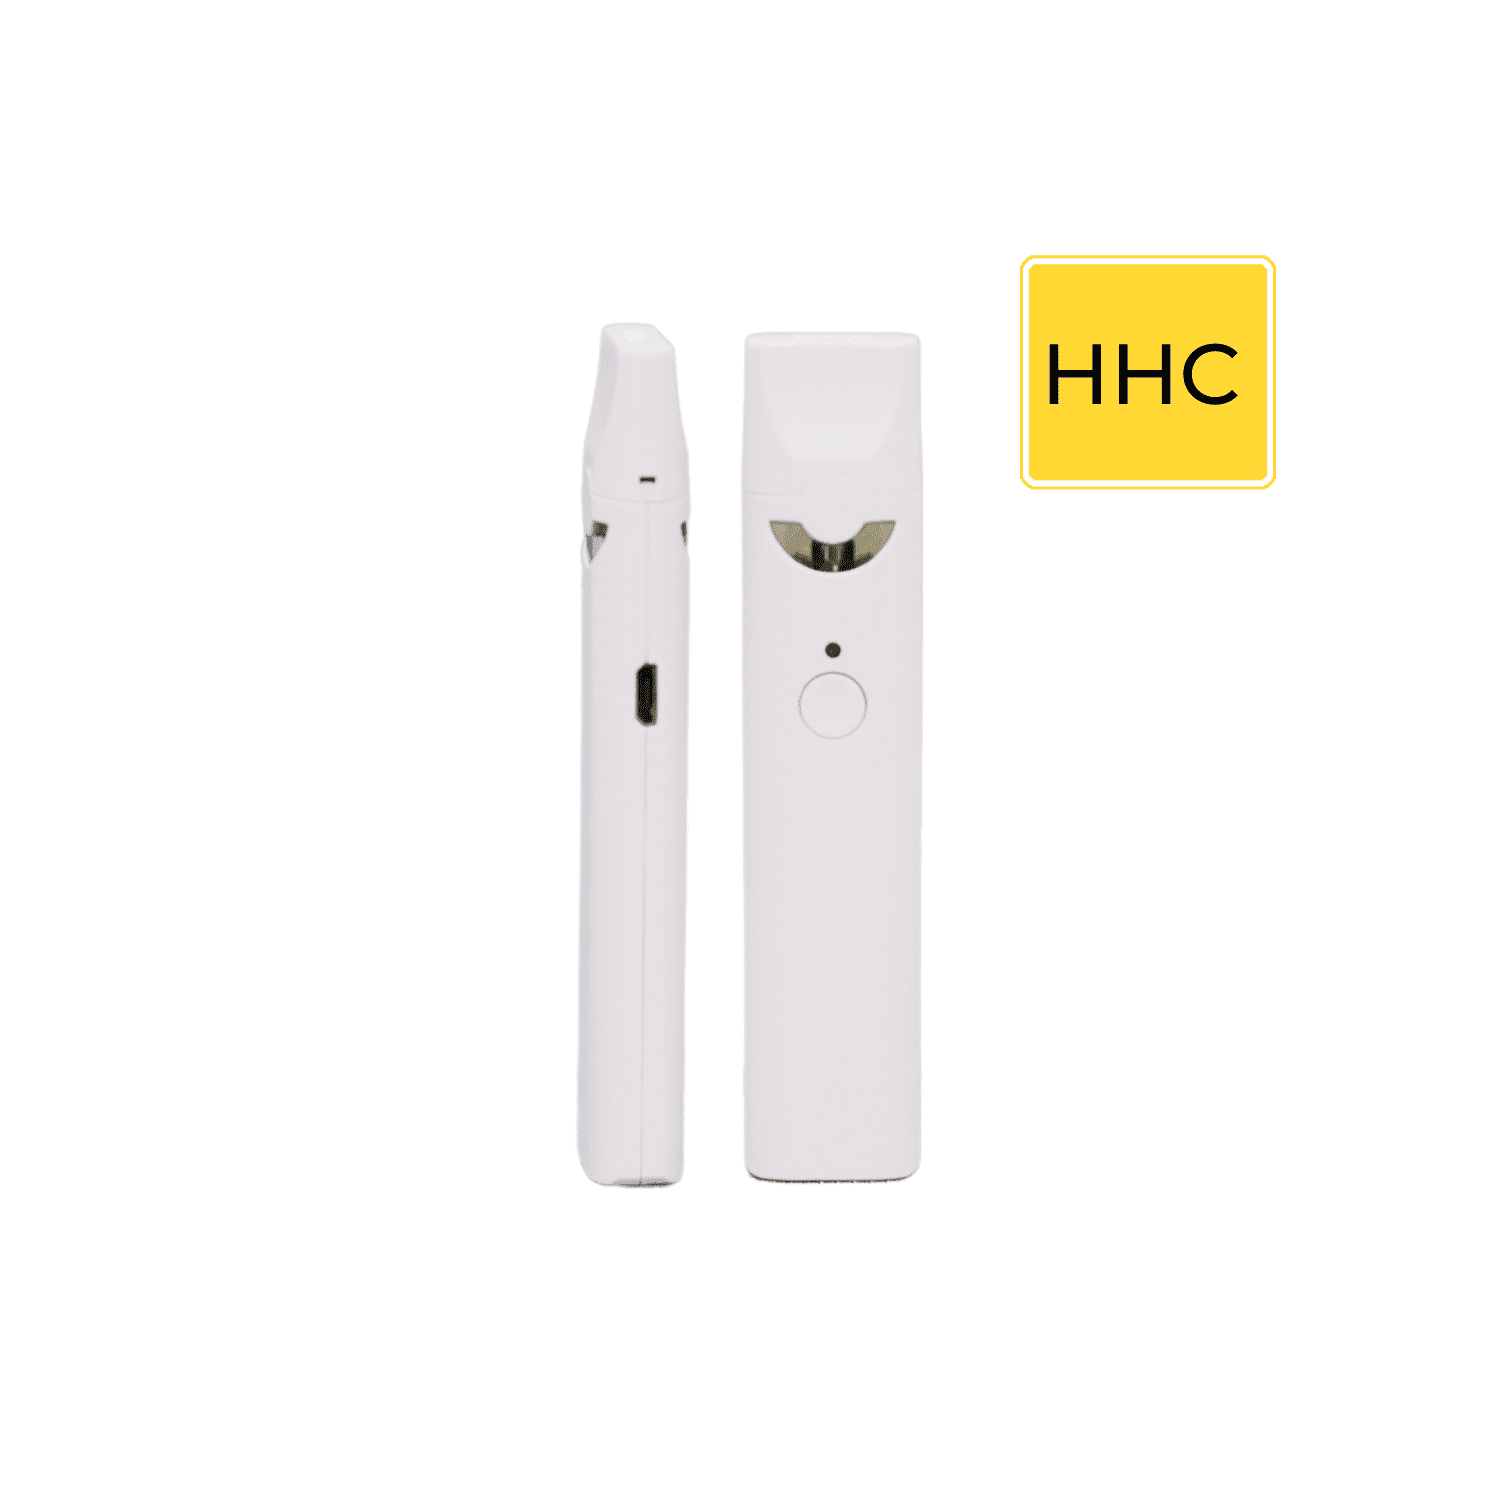 HHC Disposable Vape - DENEX Hemp Co.